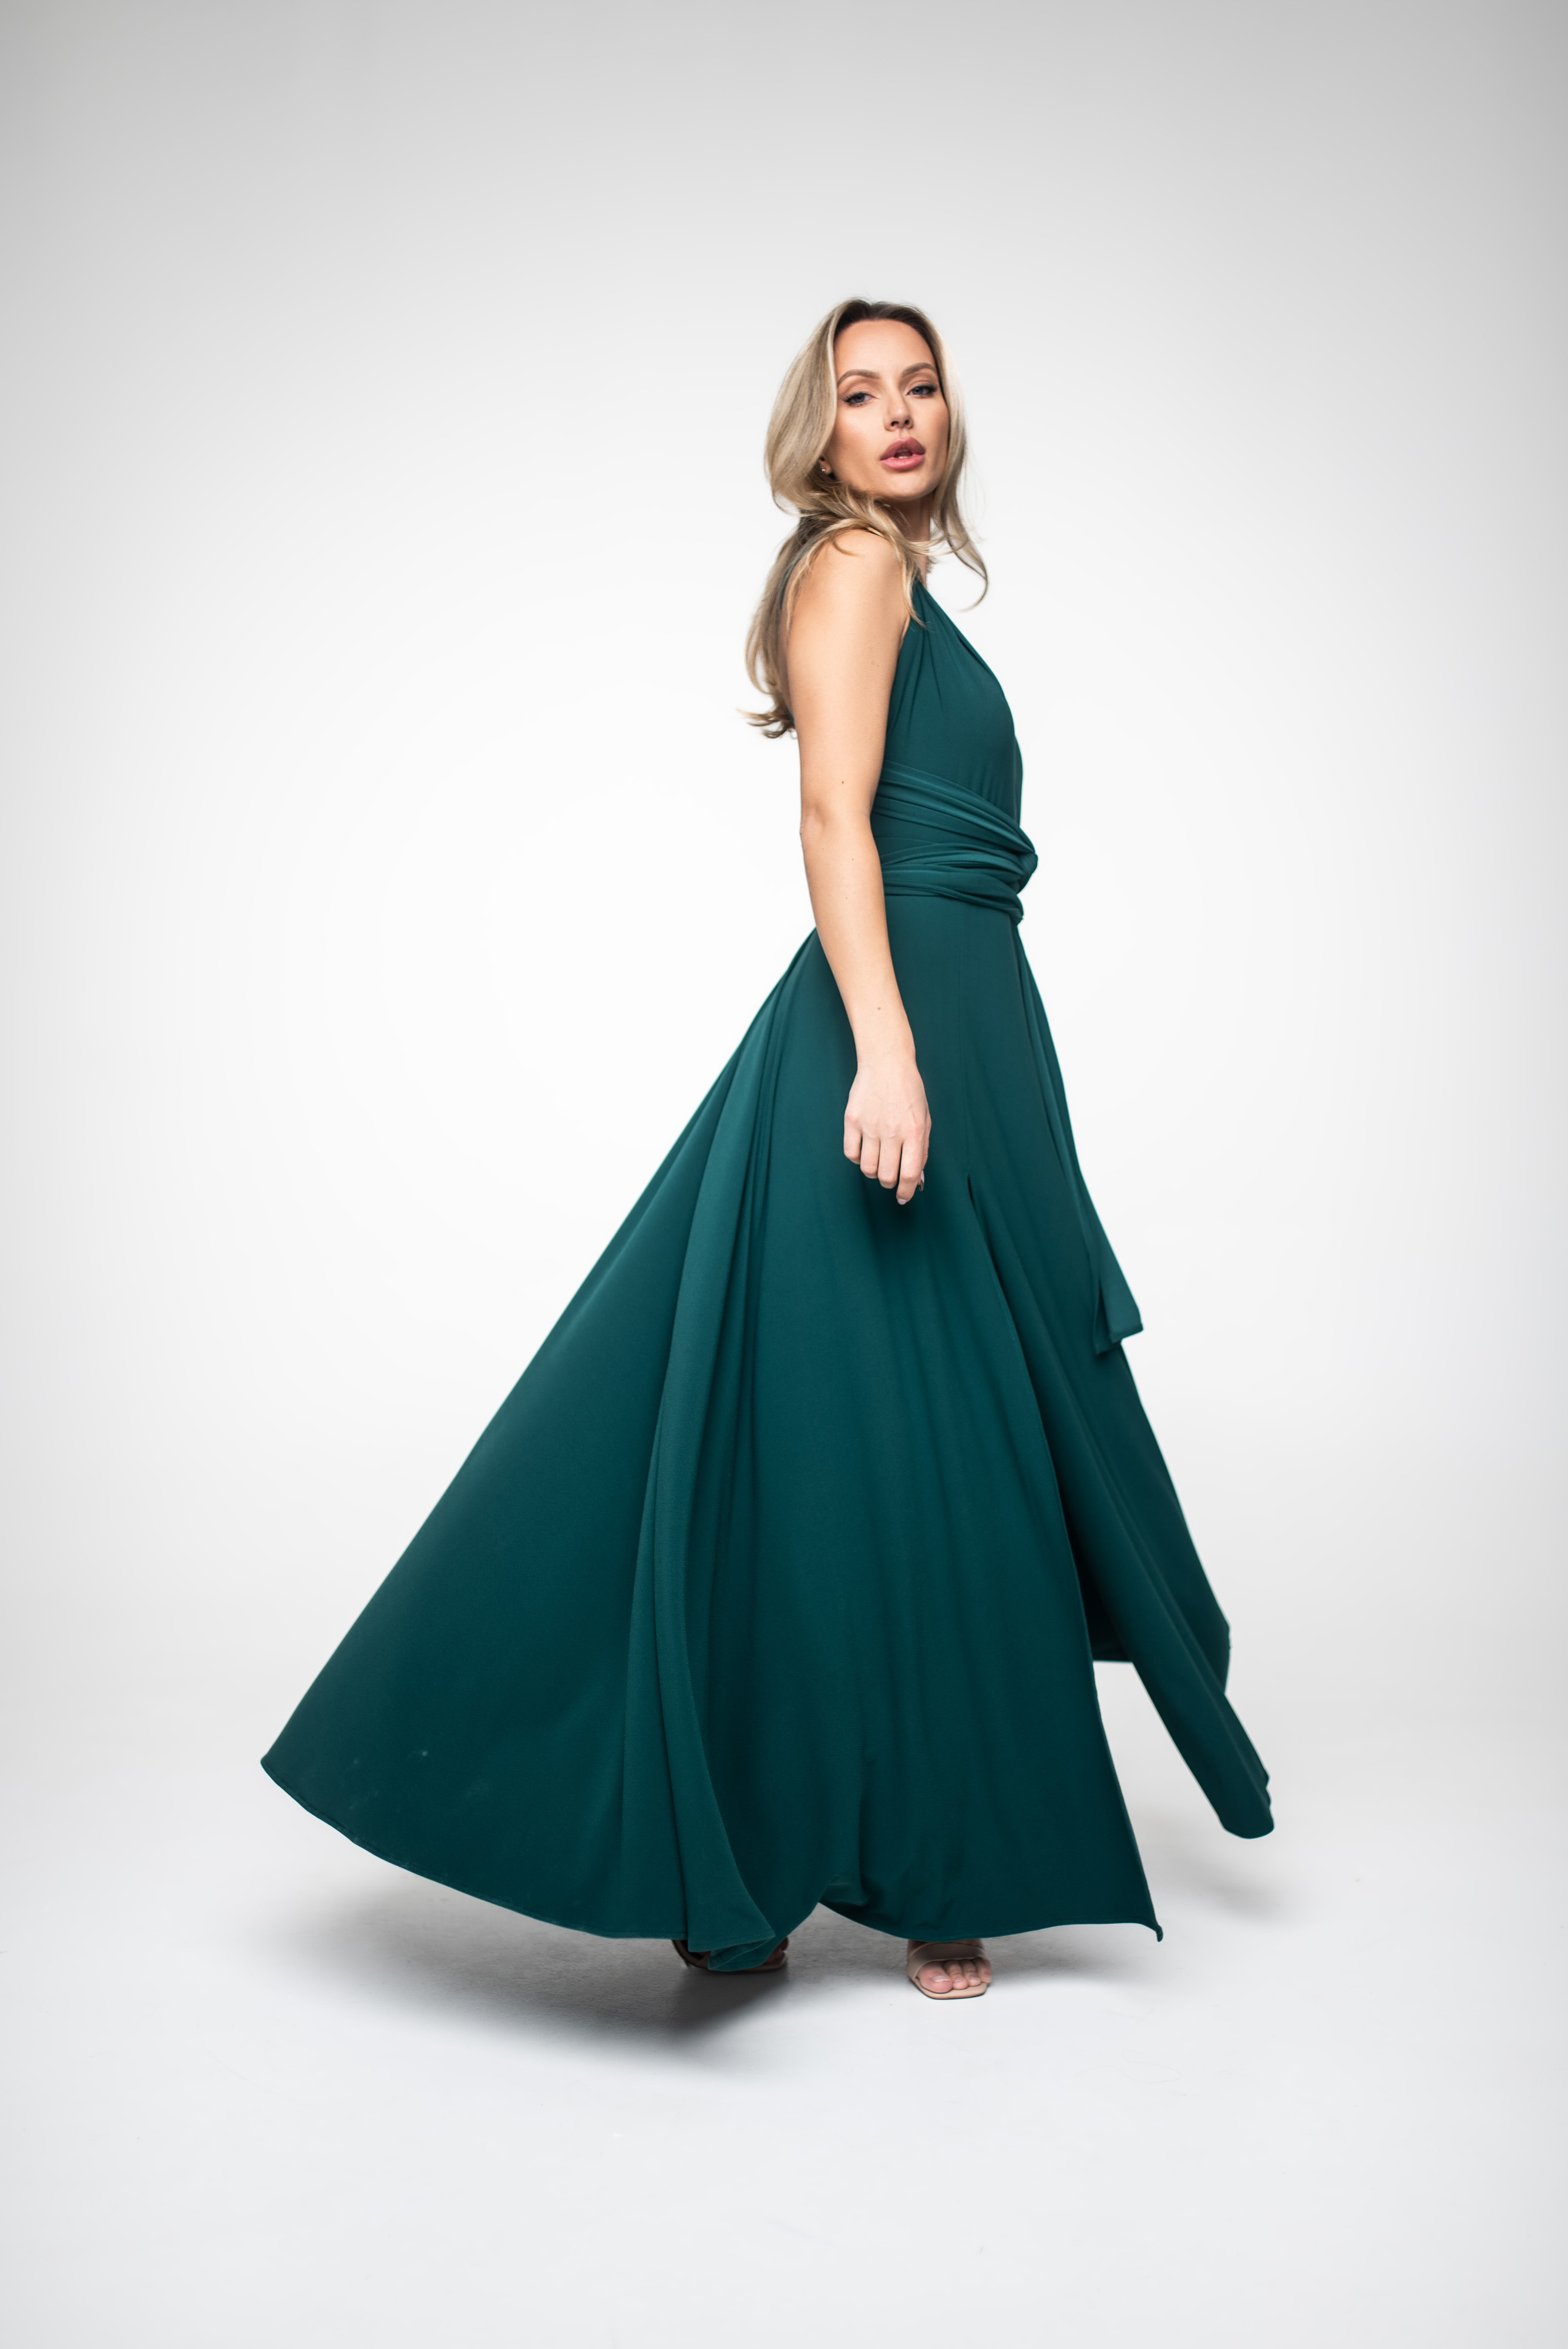 Emerald stretchy long MULTI dress